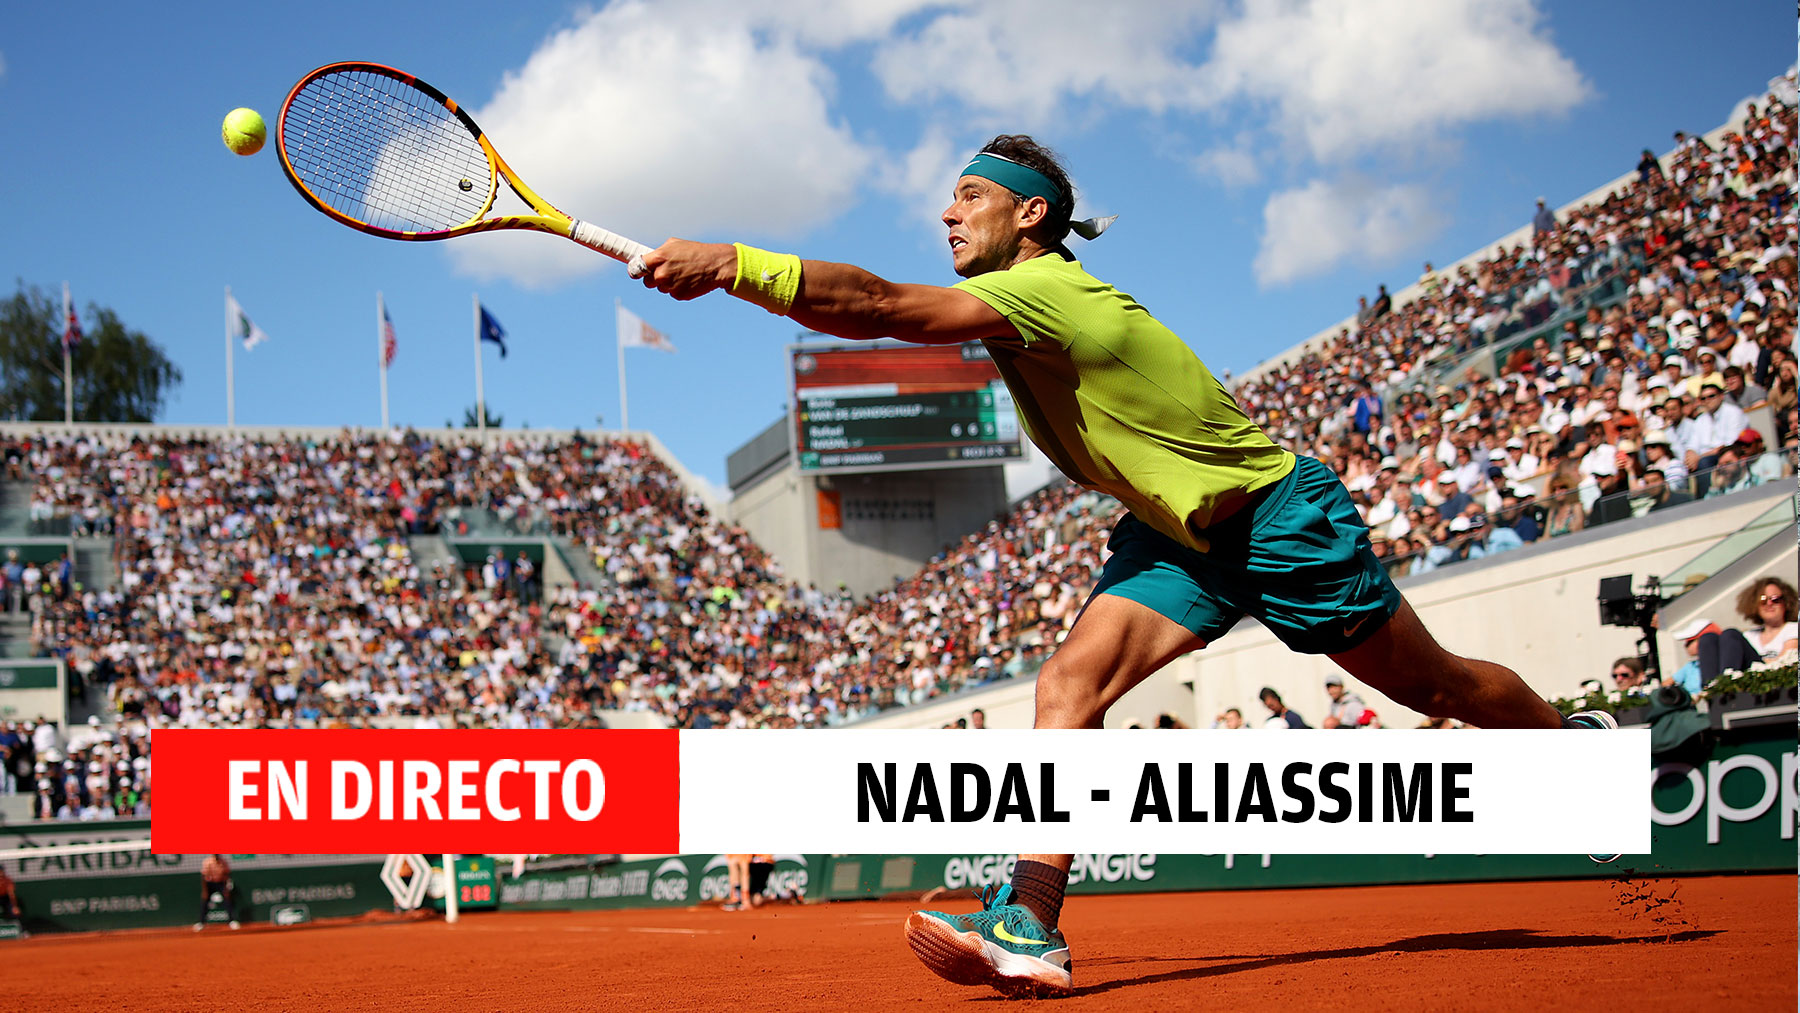 Rafa Nadal – Aliassime: partido de octavos de final de Roland Garros, en directo